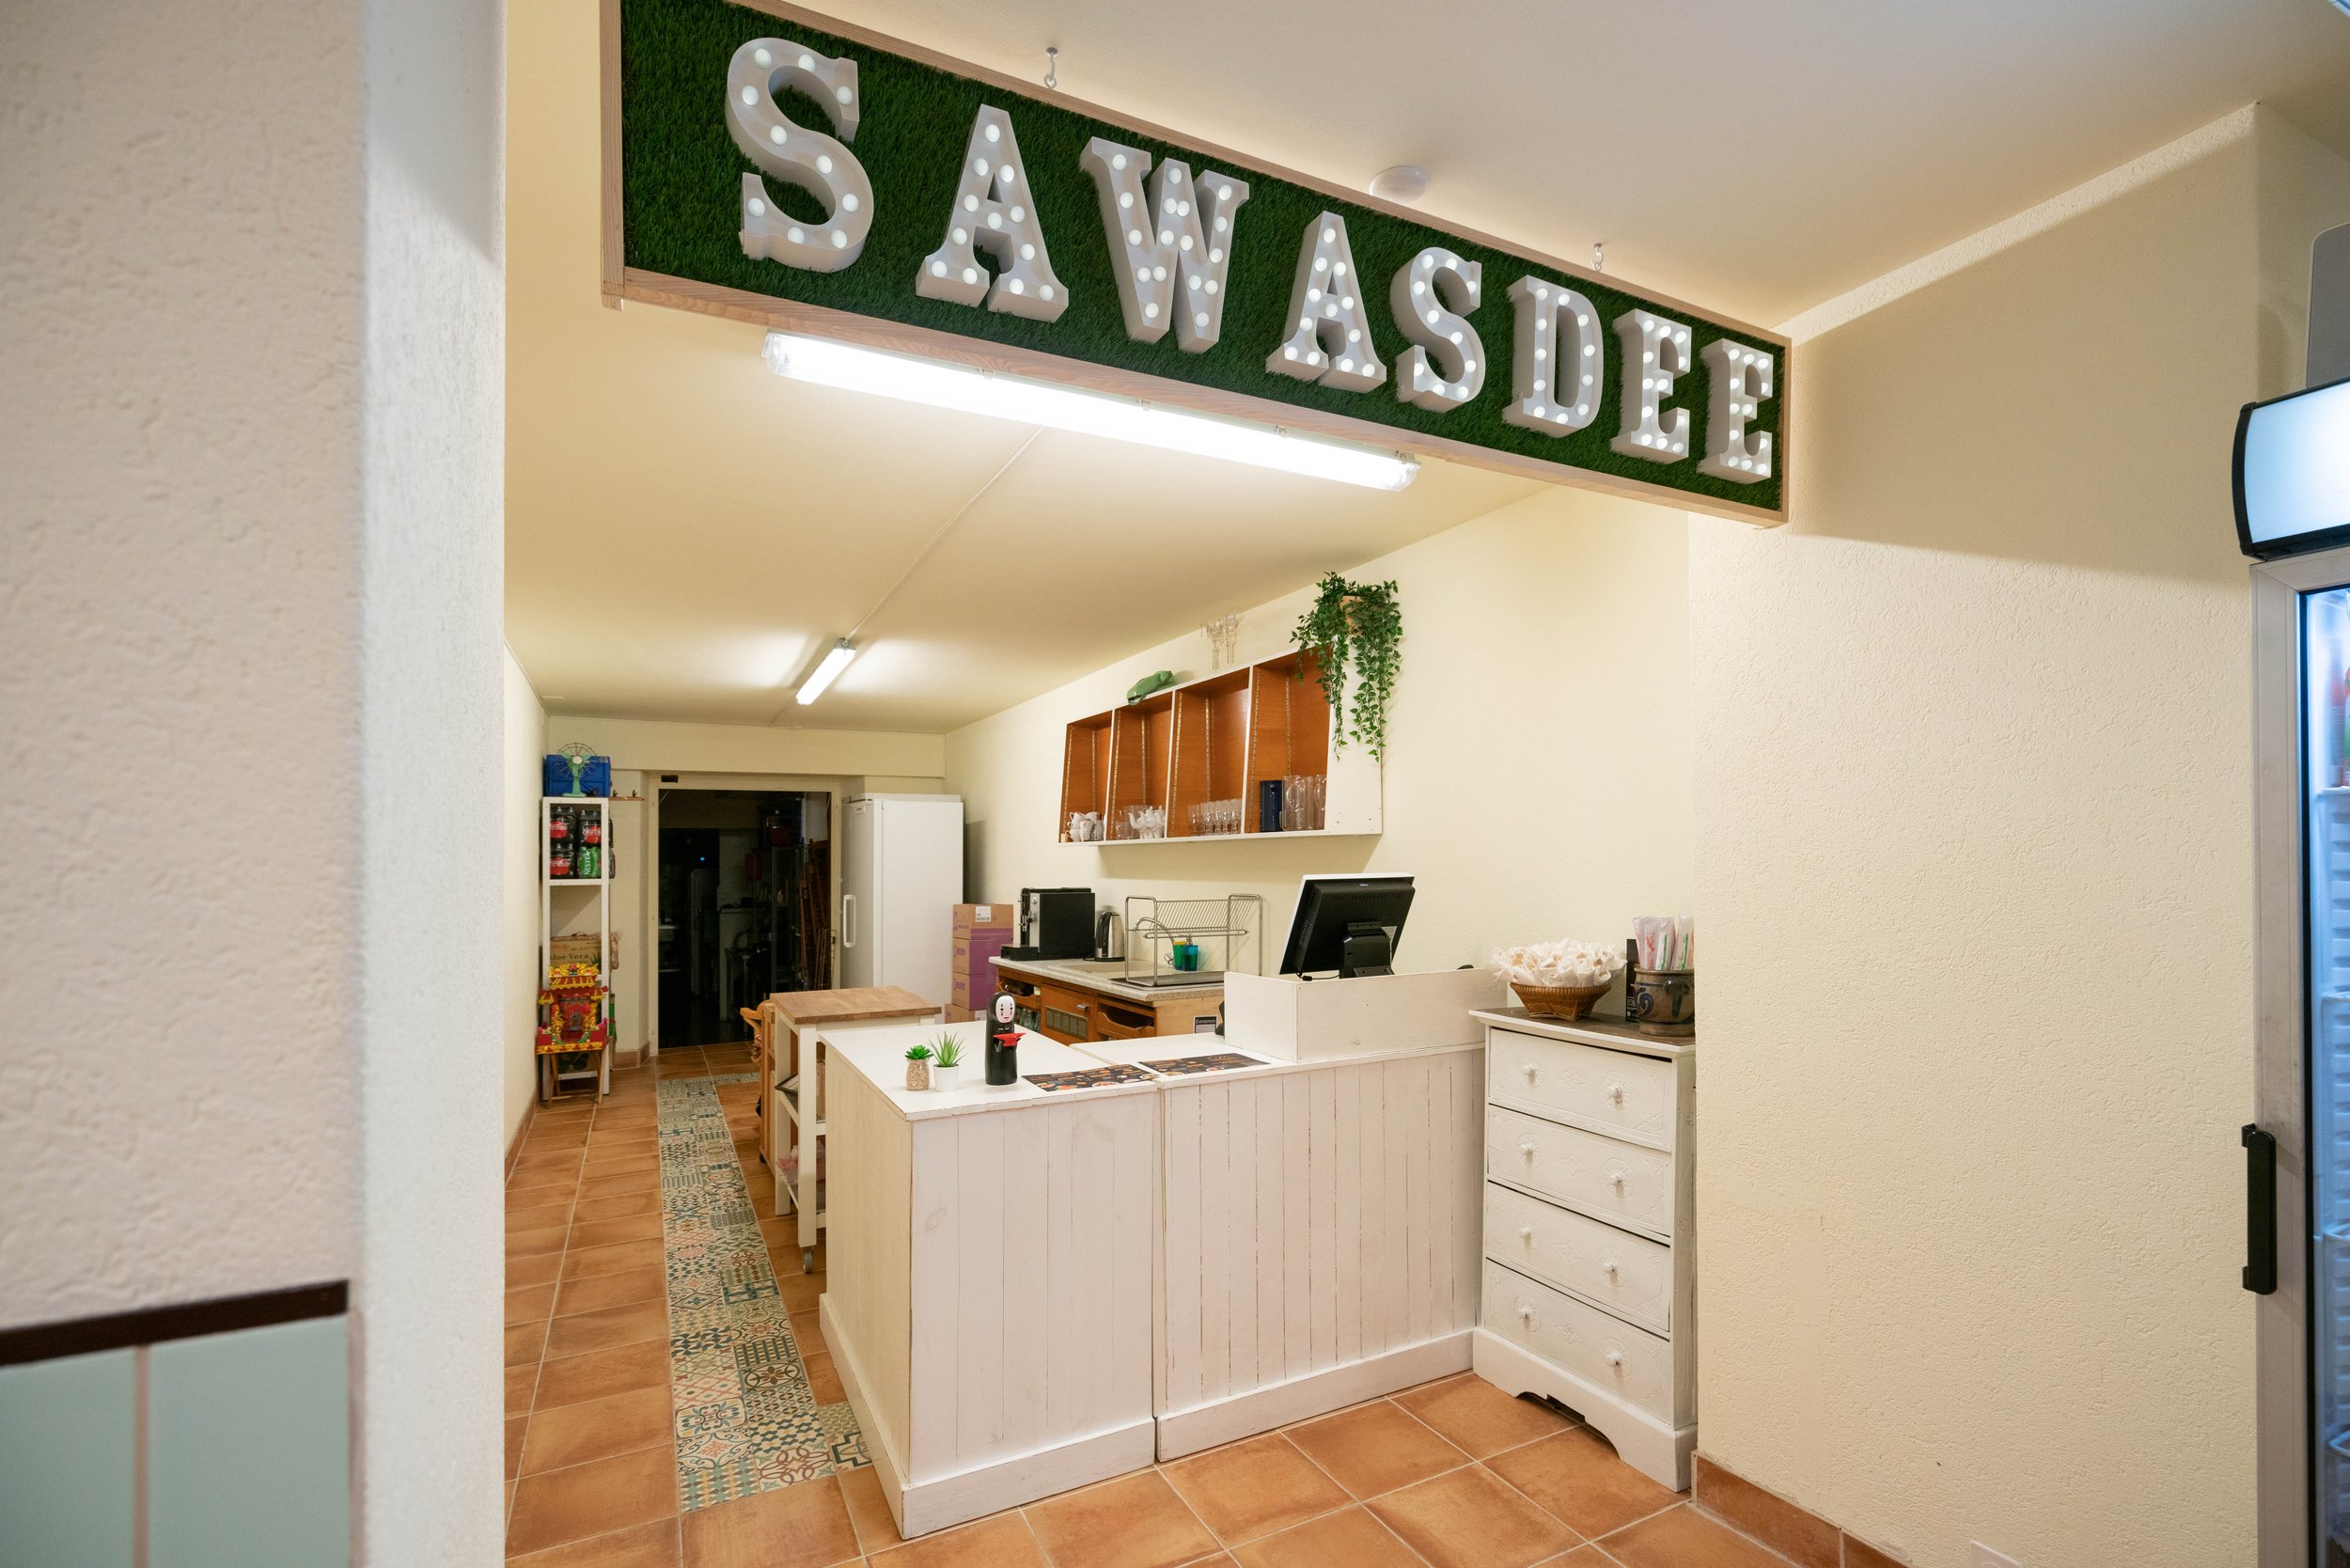 Restaurant Sawasdee, Vevey - Photographie par Crisis Visuals